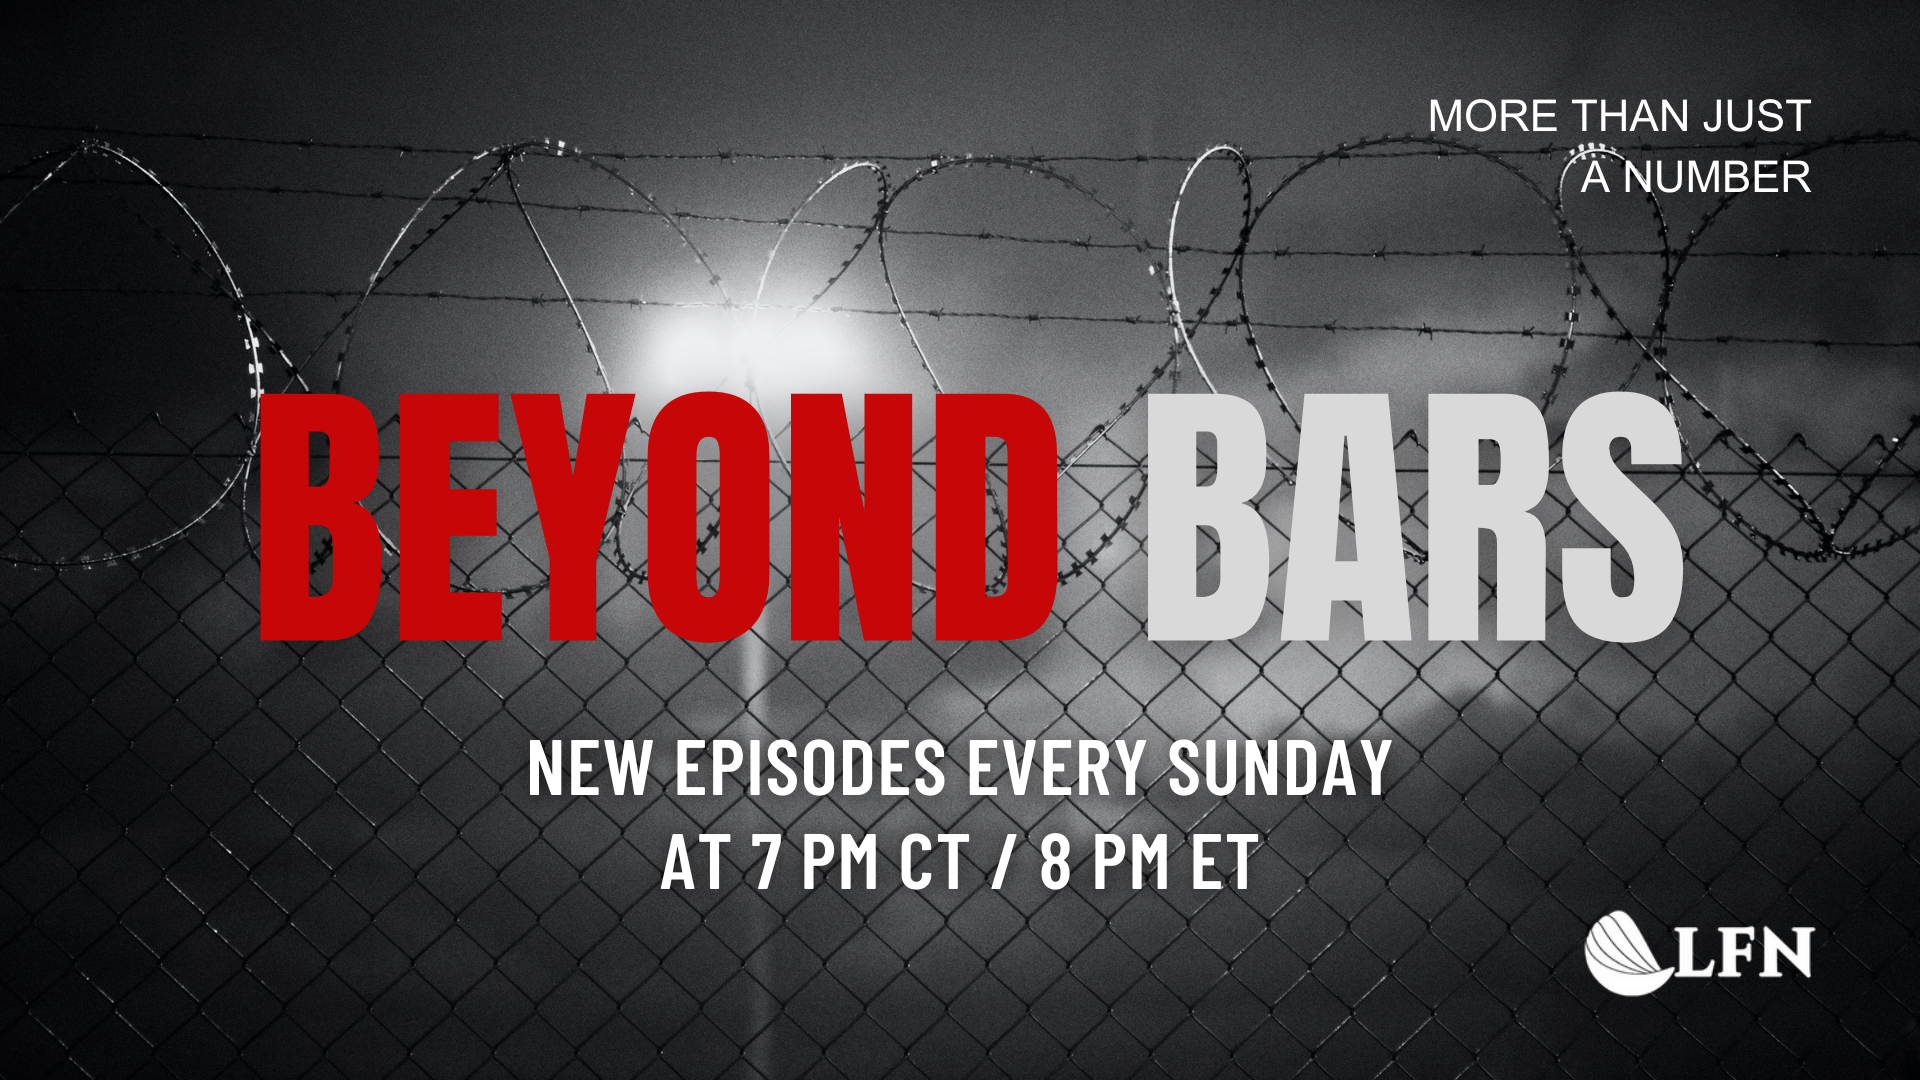 Beyond Bars Documentary Series